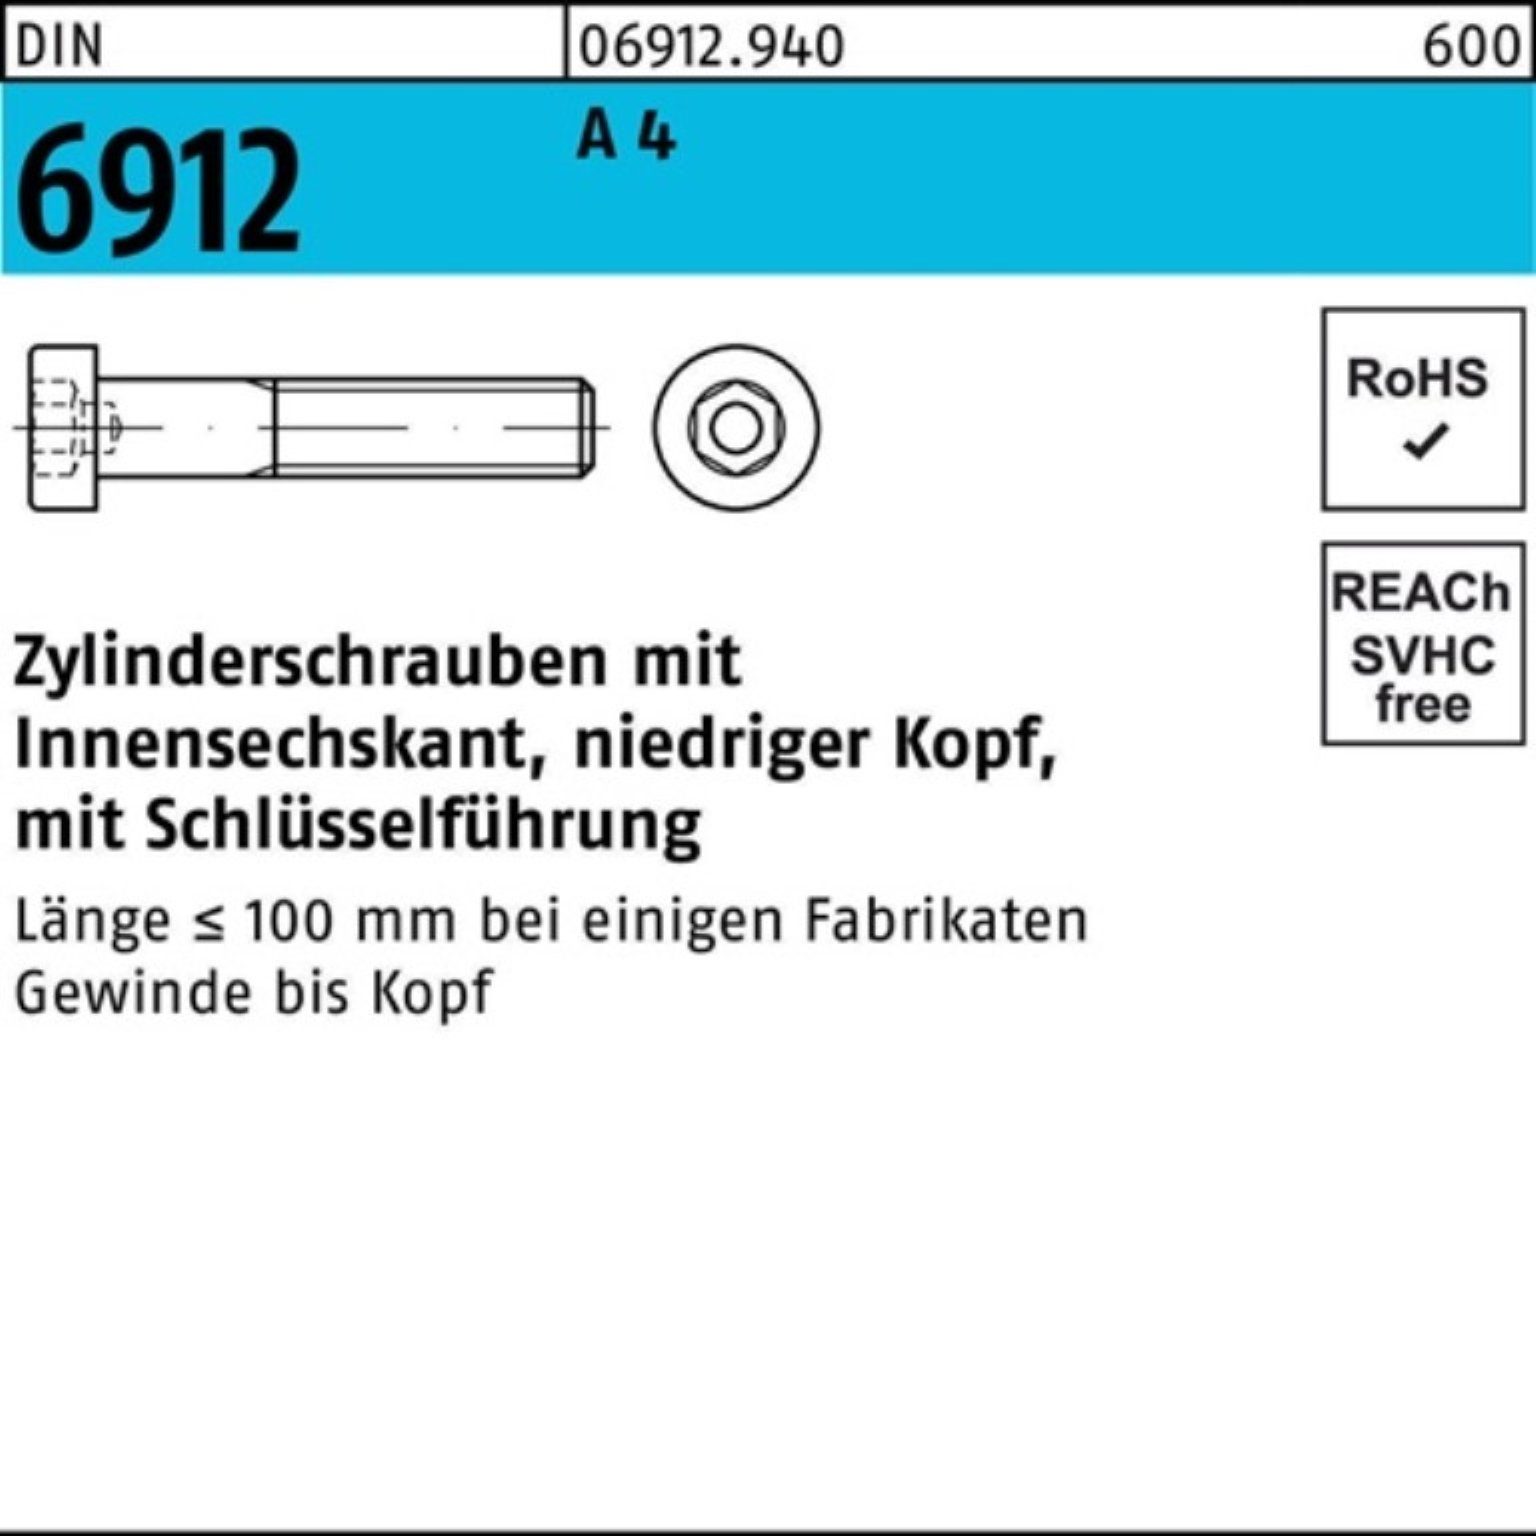 100er Zylinderschraube Reyher Pack Stück Innen-6kt 80 D 4 M6x 6912 A Zylinderschraube 100 DIN